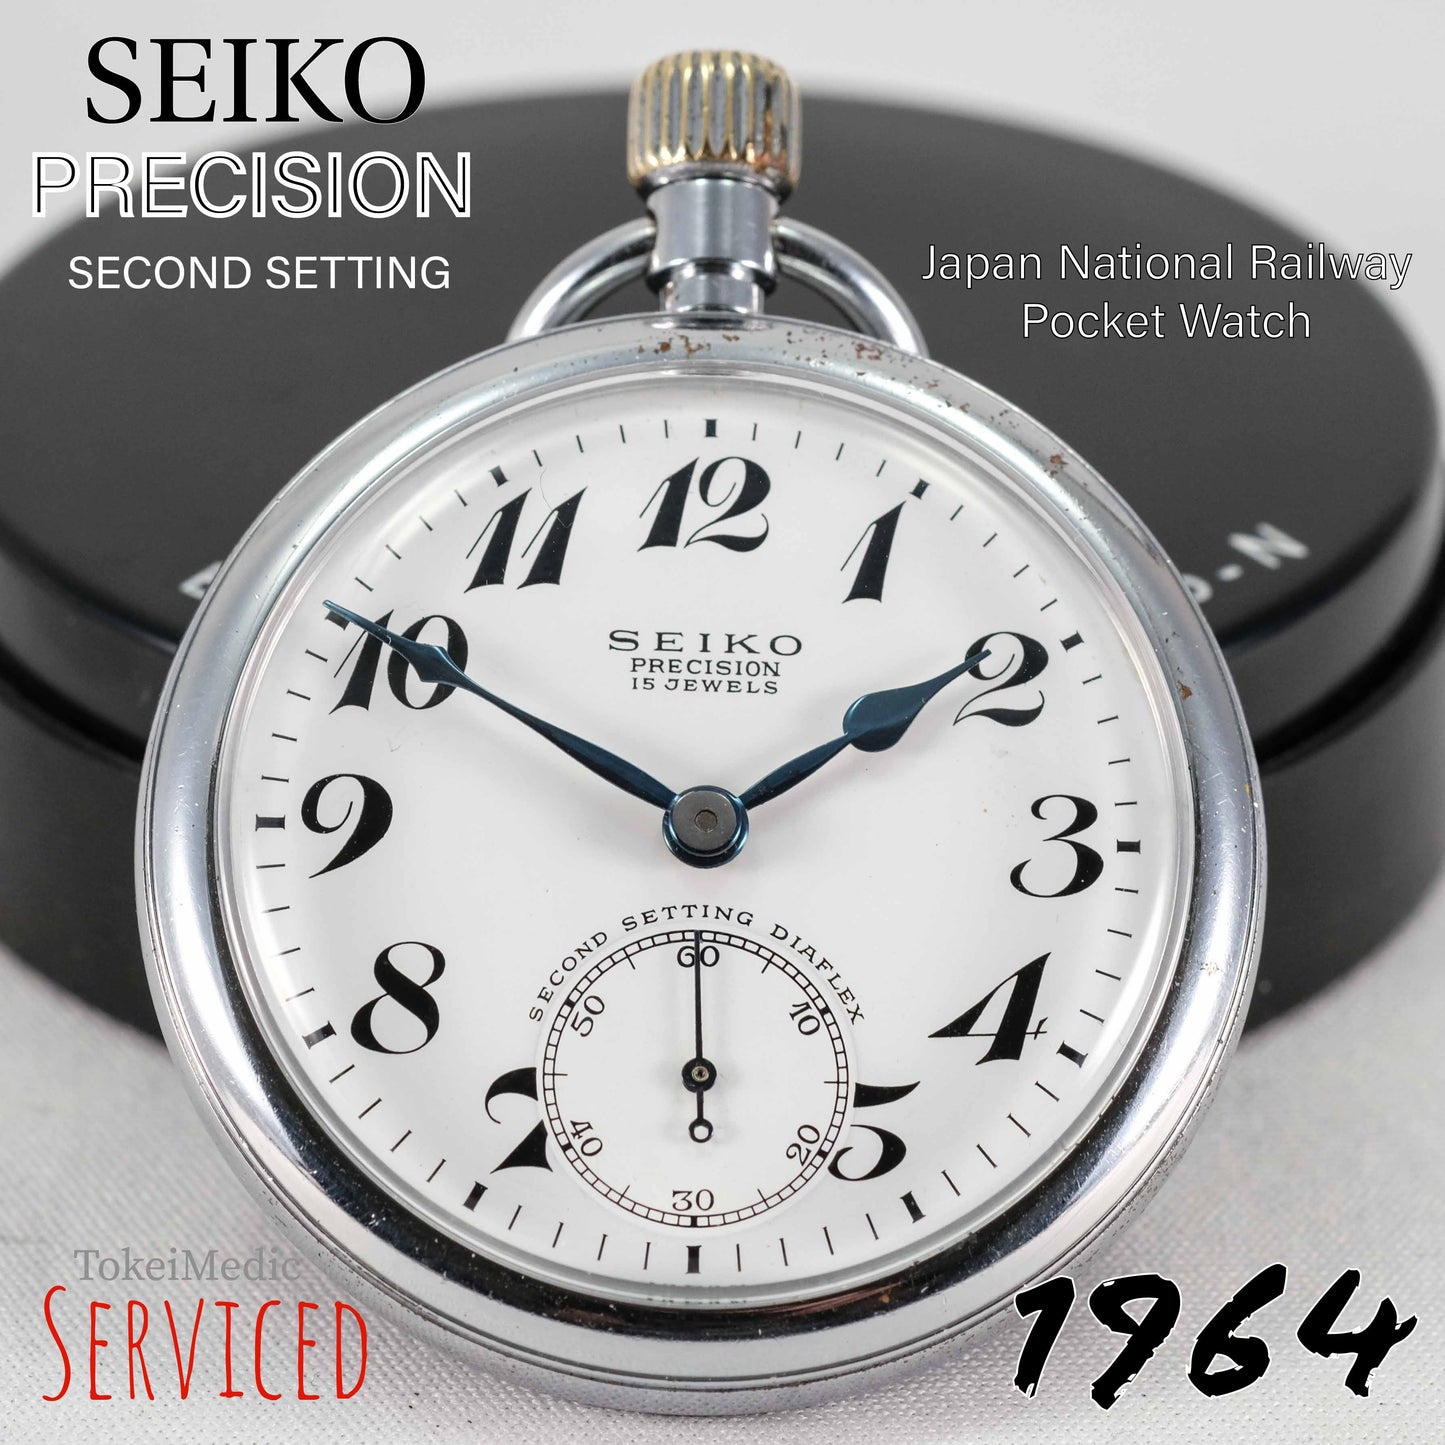 1964 Seiko Seikosha Precision Second Setting Japan National Railway Pocket Watch